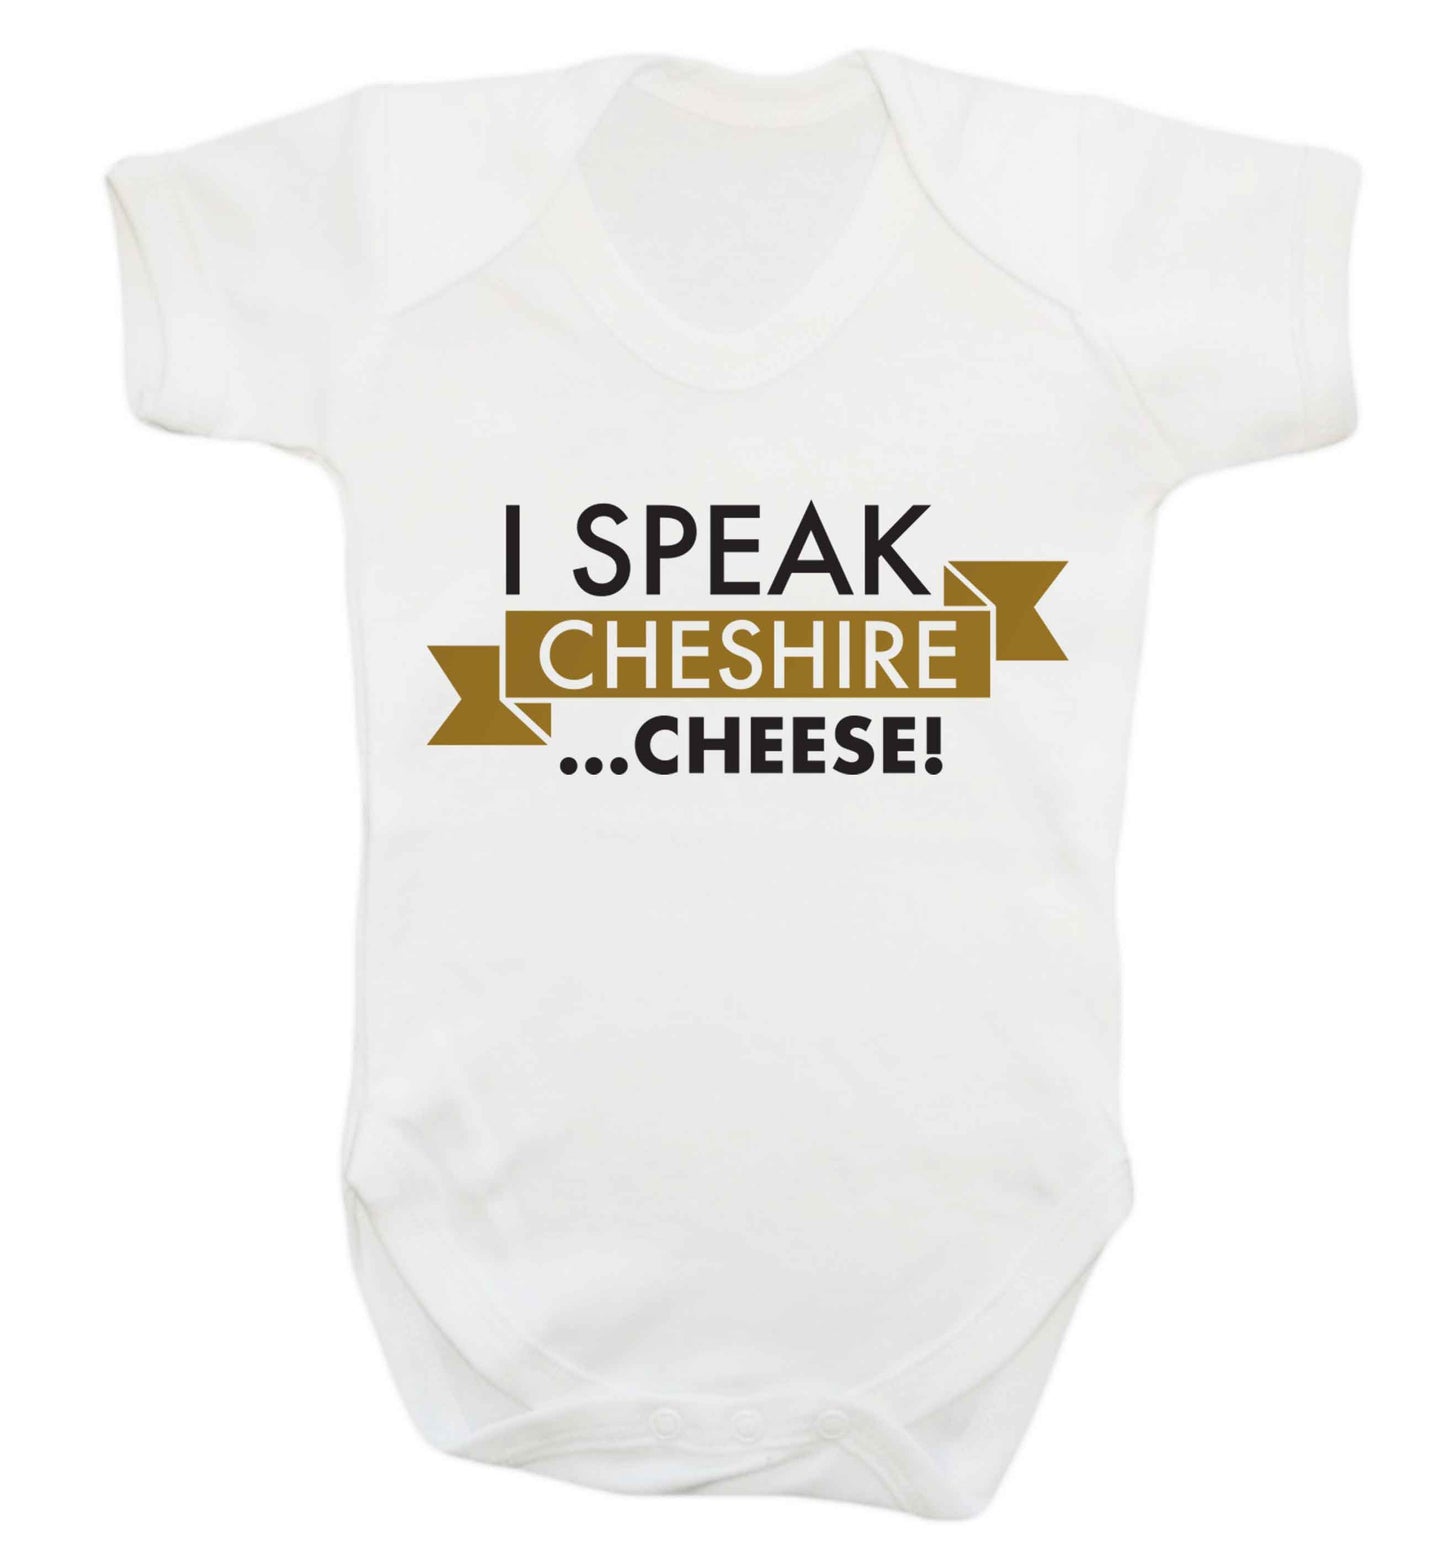 I speak Cheshire cheese Baby Vest white 18-24 months